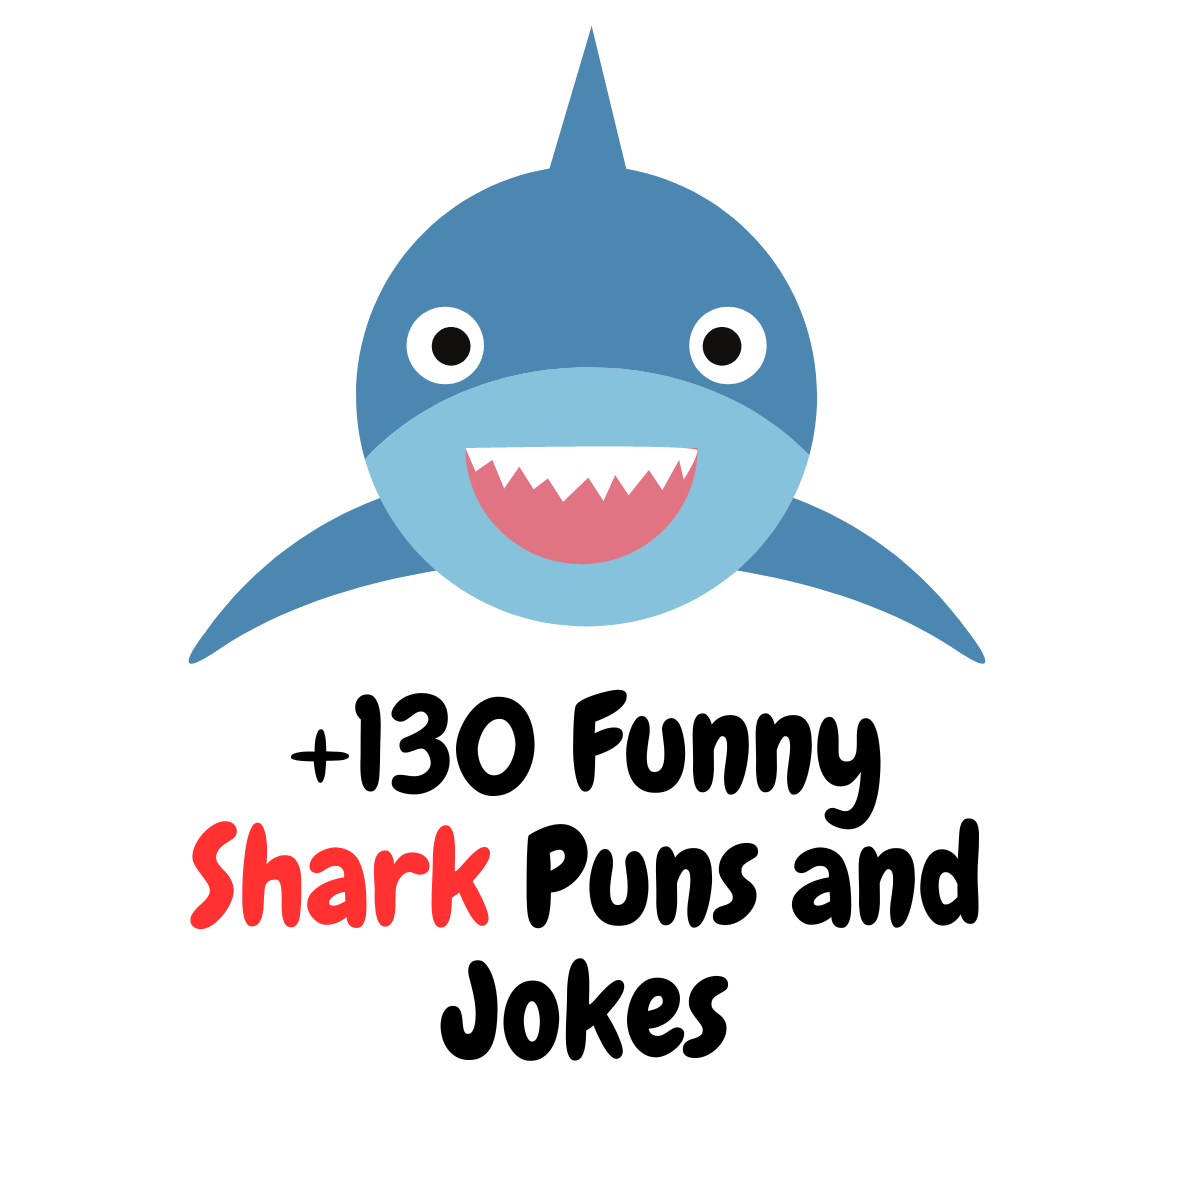 +130 Hilarious Shark Puns and Jokes: Dive Deep into Humor